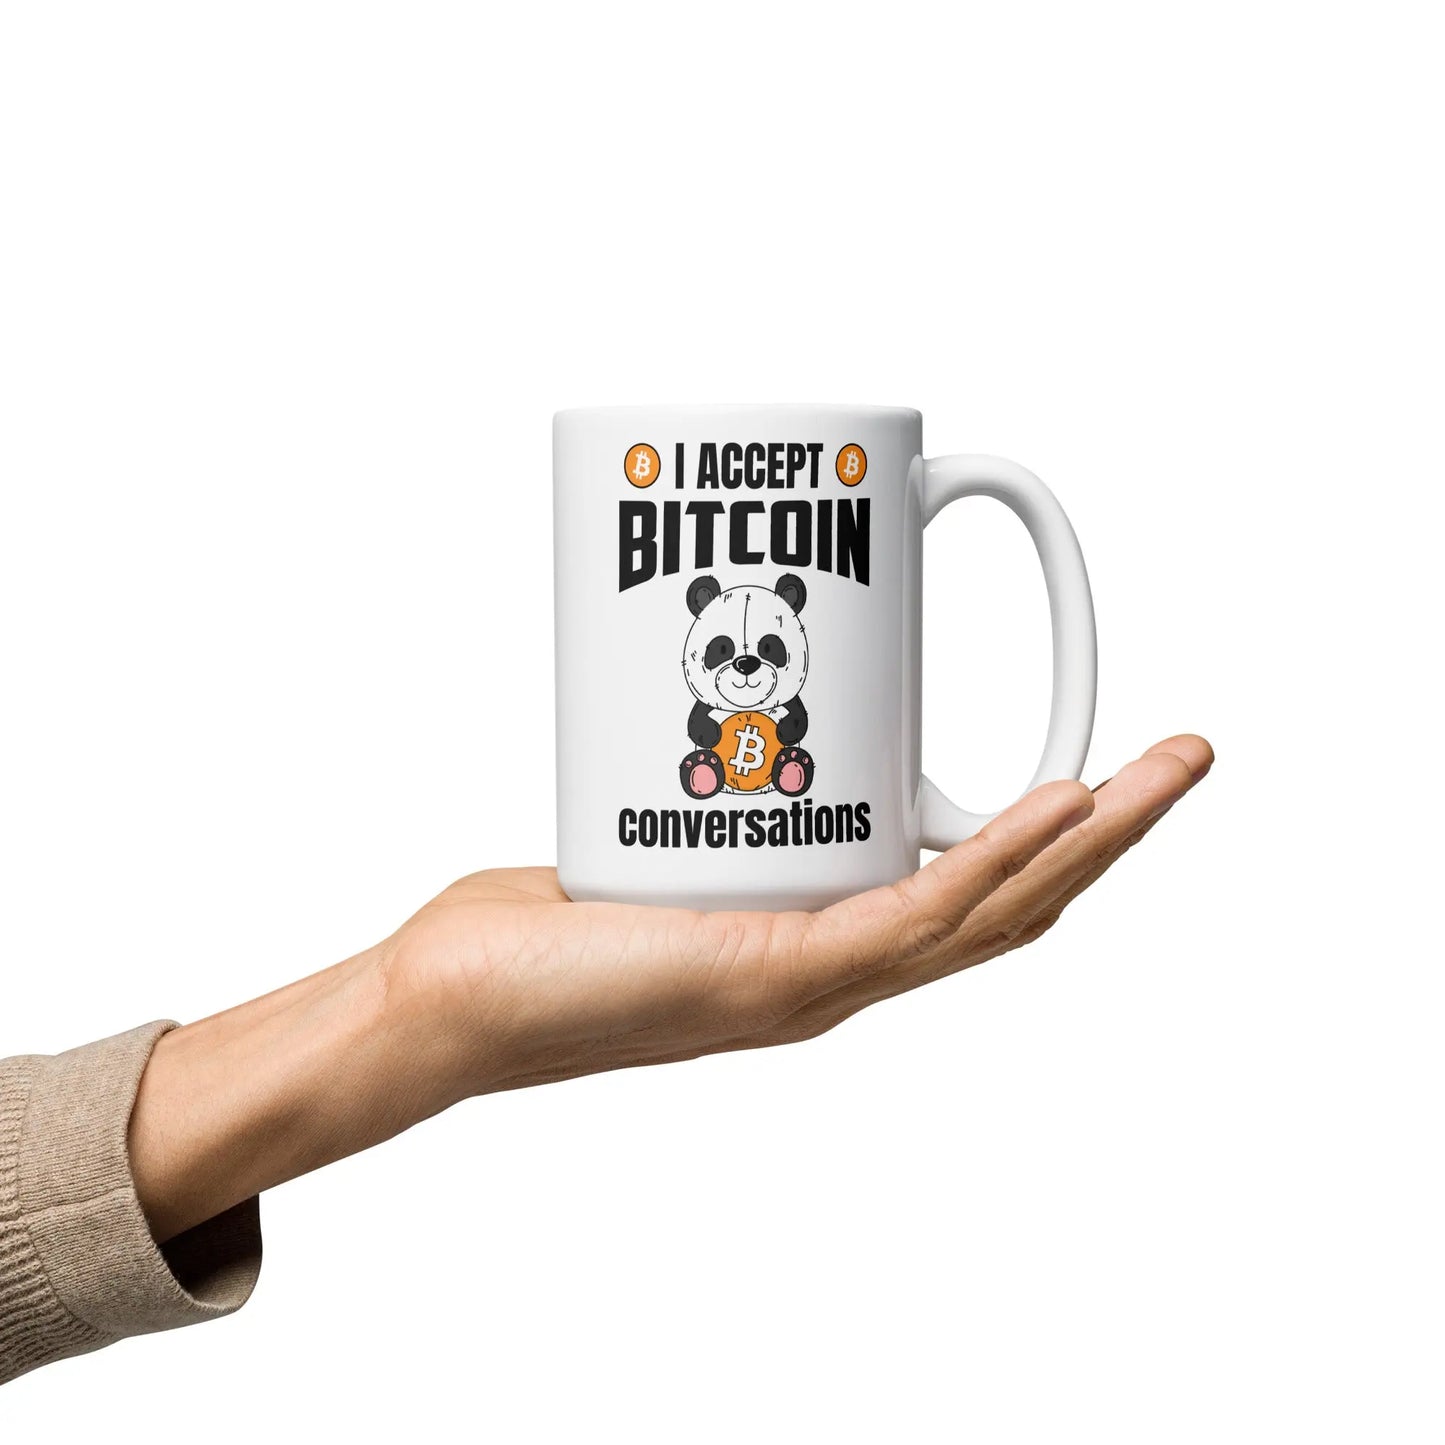 I Accept Bitcoin Conversations - White Glossy Bitcoin Mug